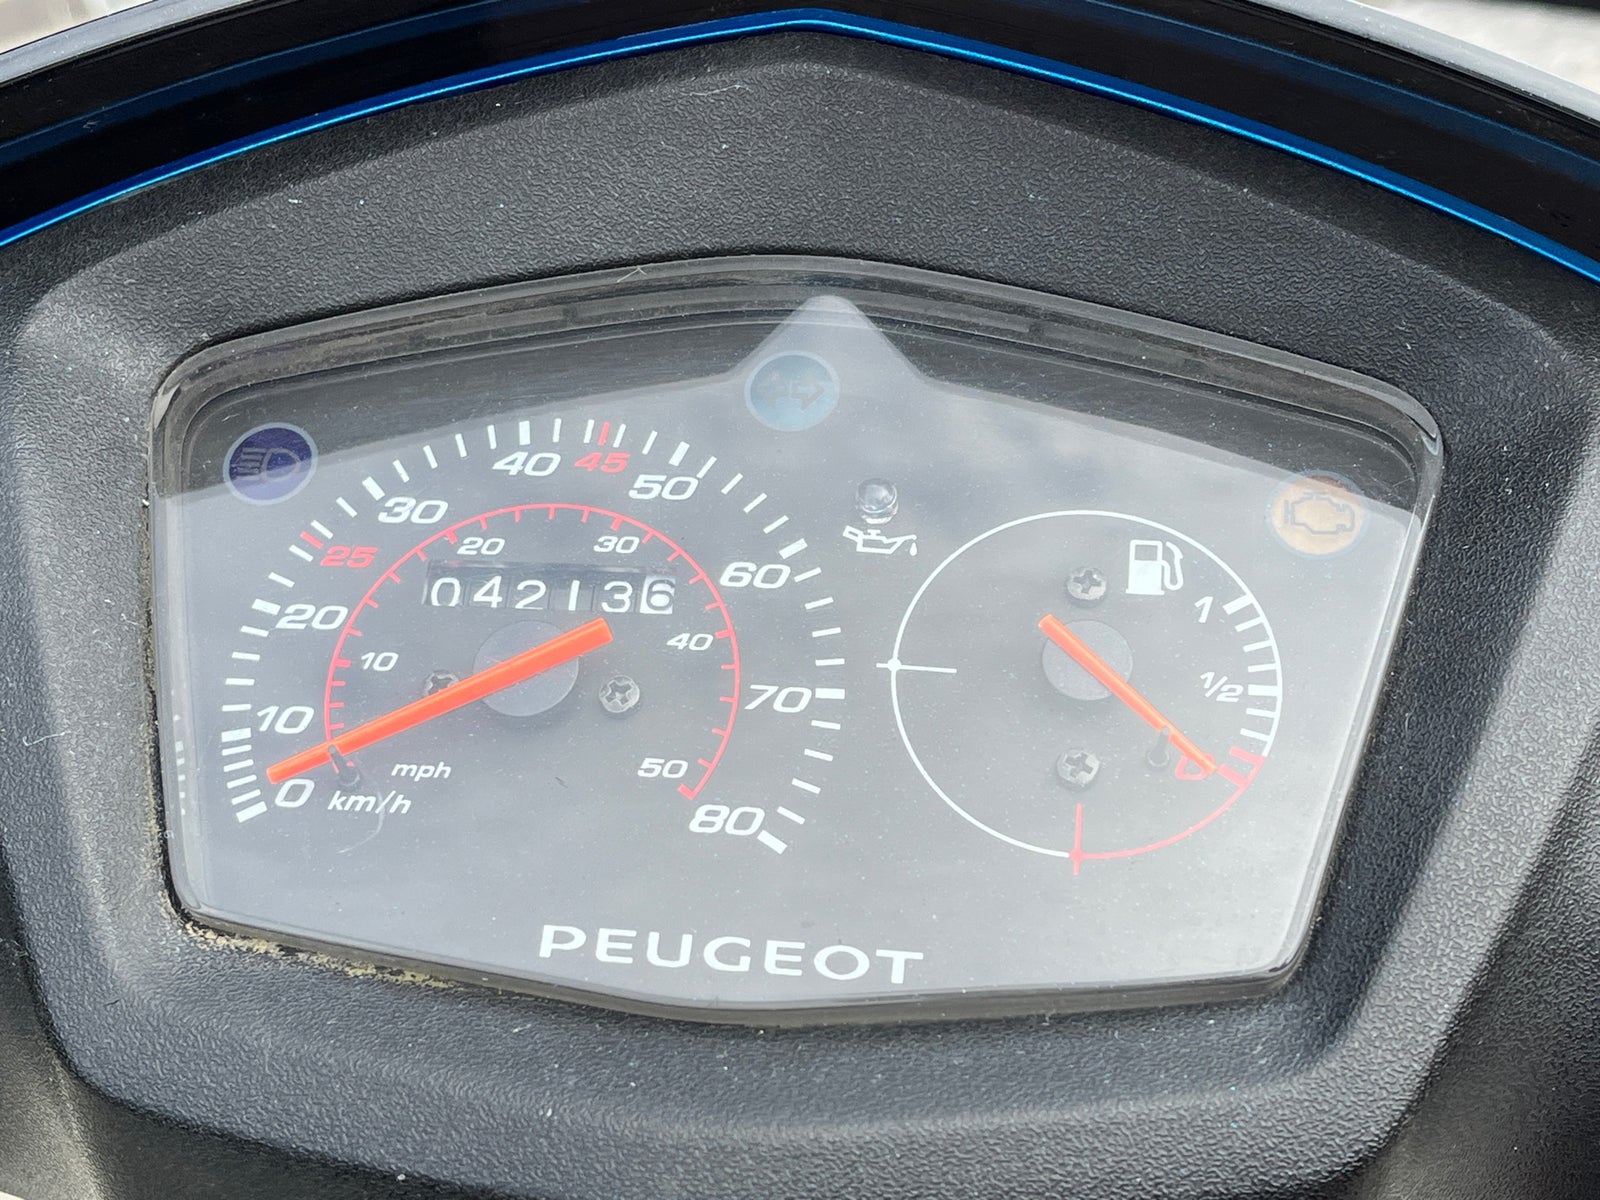 Peugeot KISBEE RS BLUE EDITION 2T EFI, 2021, 4200 km